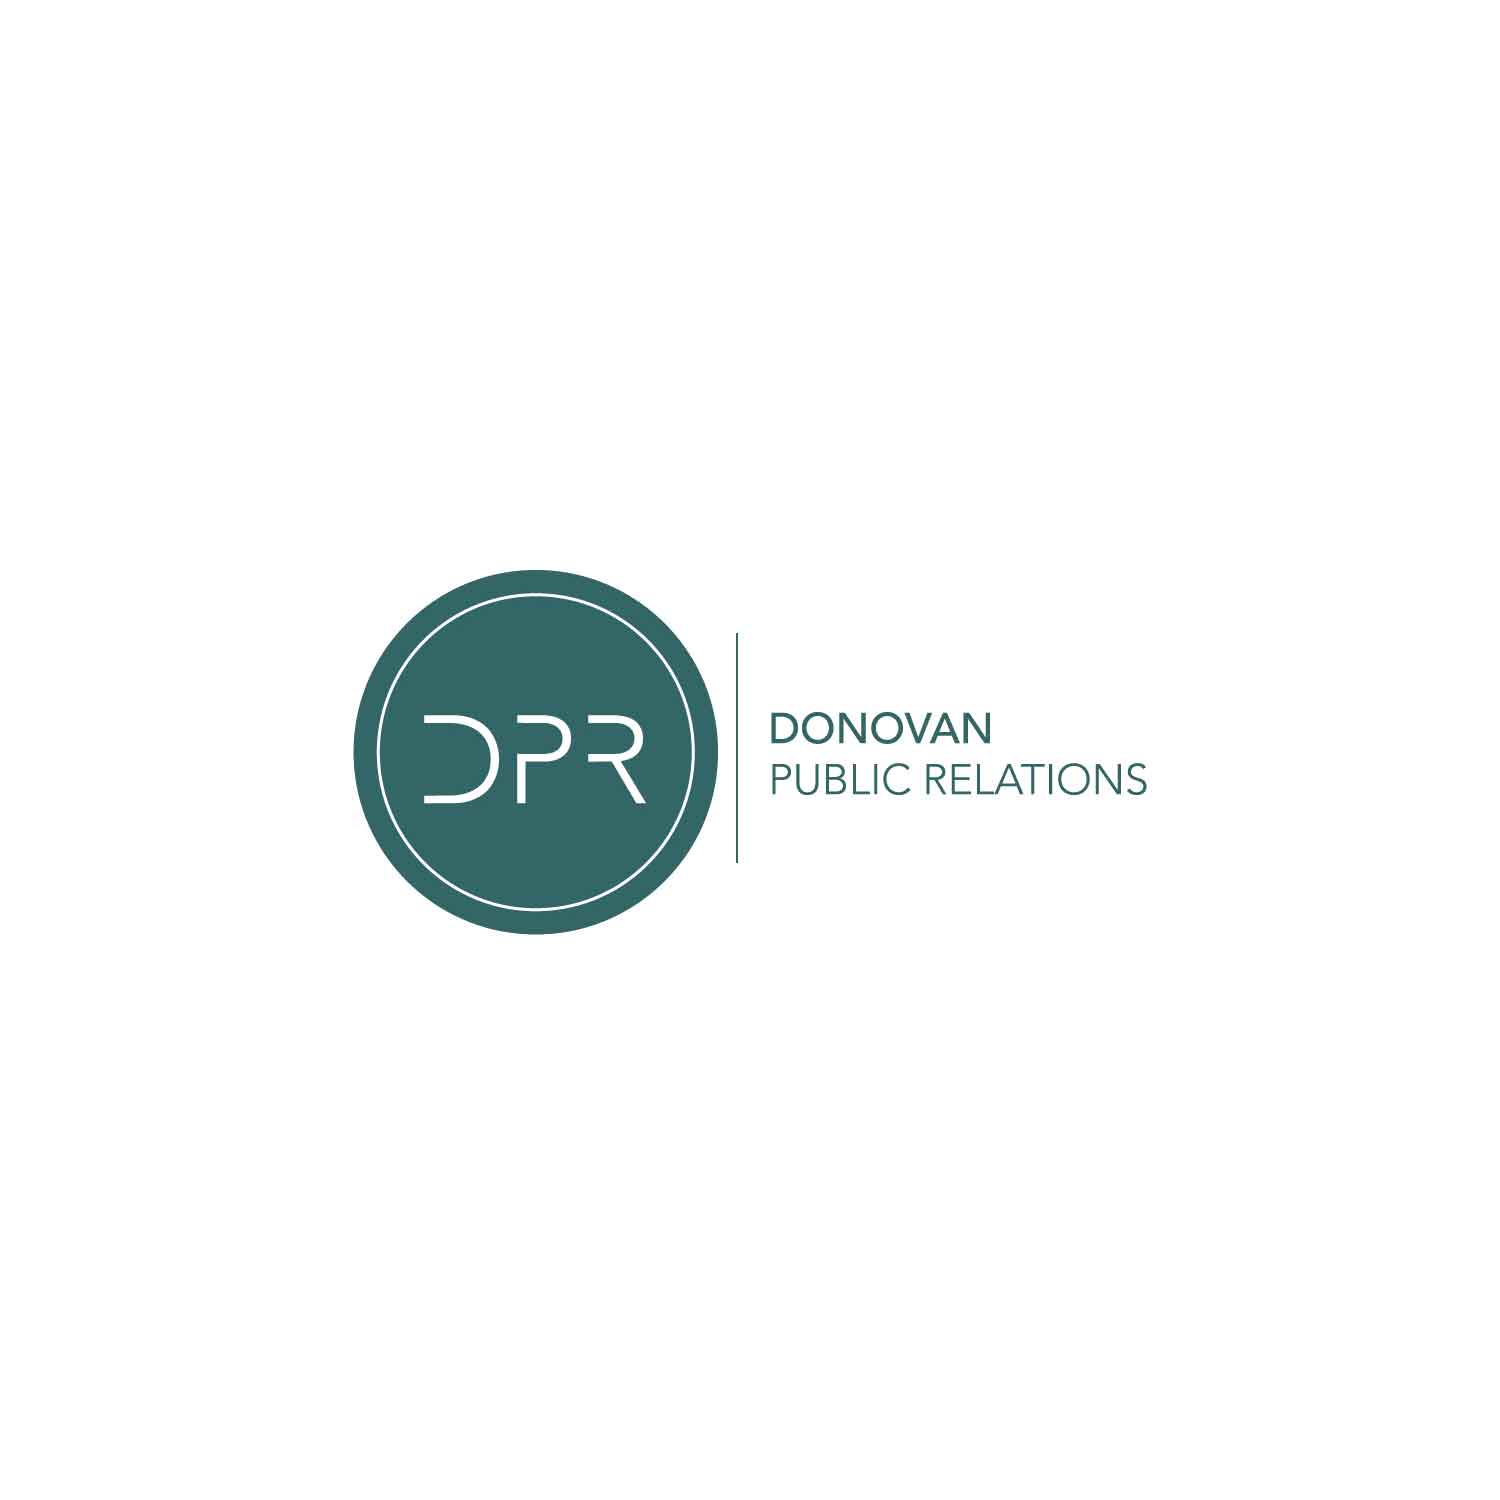 DPR Logo - Donovan Public Relations